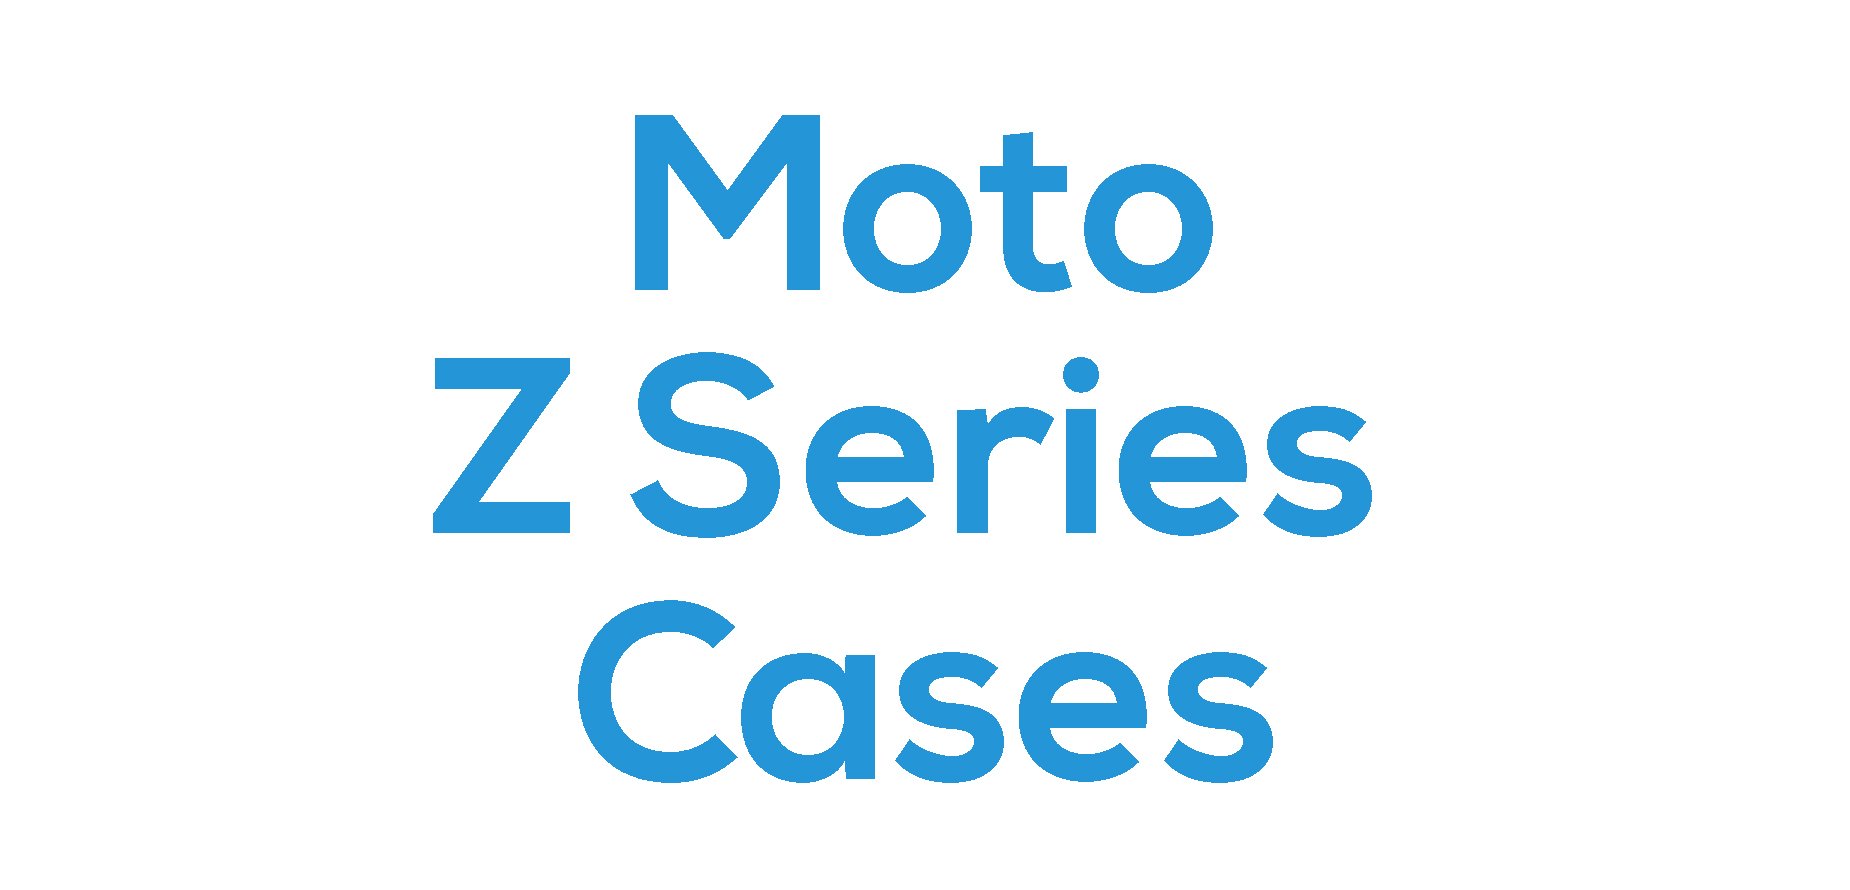 Moto Z Series Cases